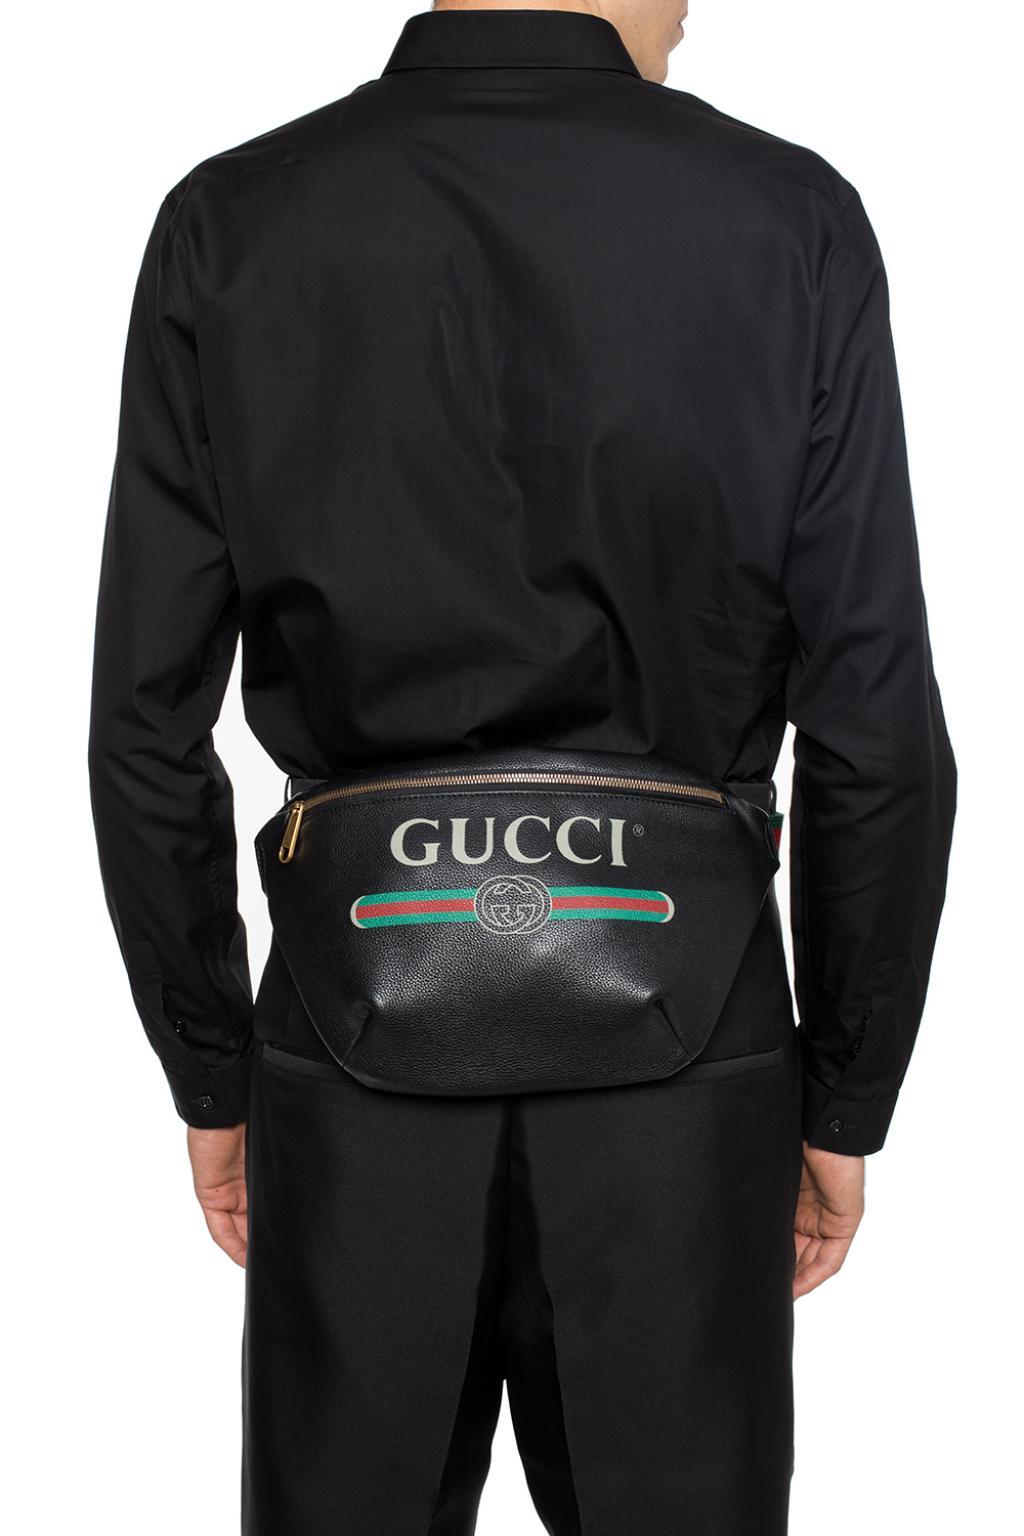 Gucci Print Belt Bag Vintage Logo Small White